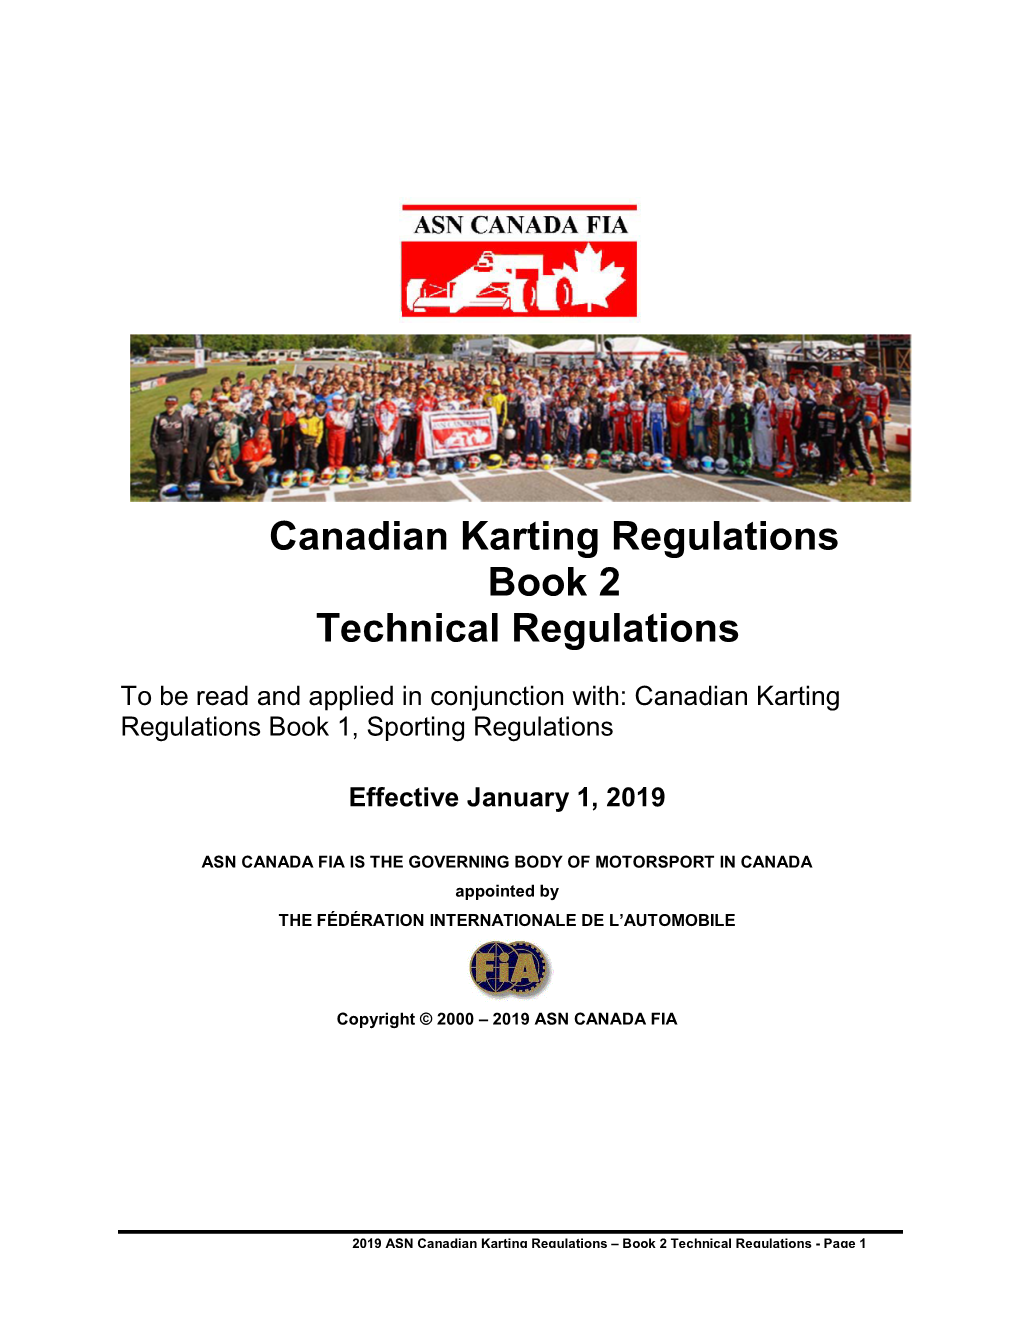 Canadian Karting Regulations Book 2 Technical Regulations